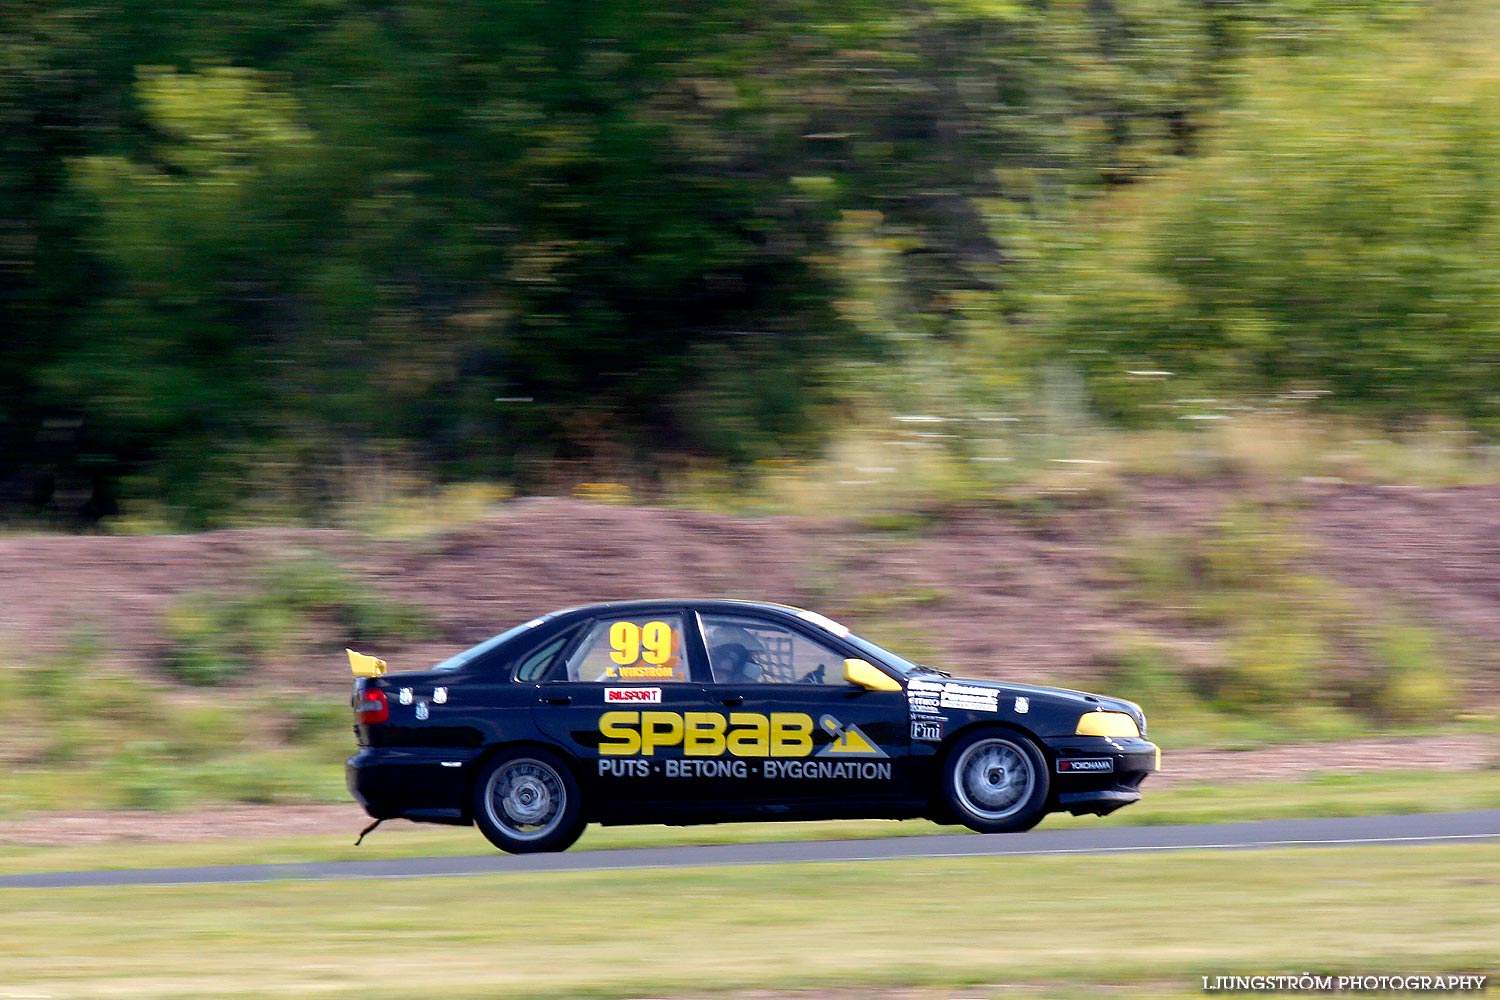 SSK Raceweek,mix,Kinnekulle Ring,Götene,Sverige,Motorsport,,2014,90517